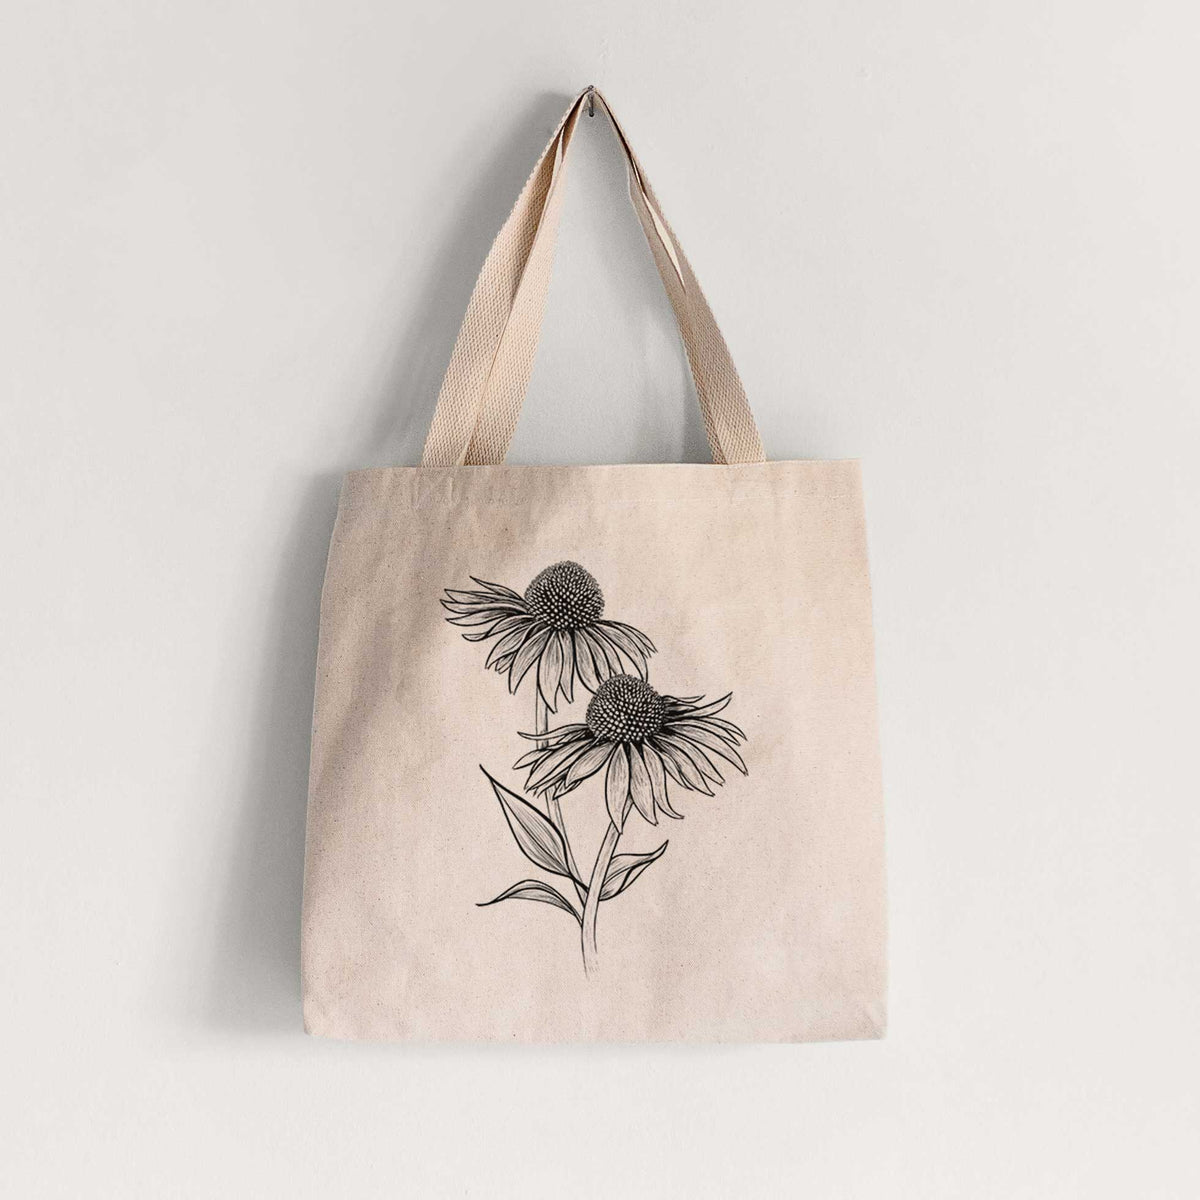 Coneflower - Echinacea purpurea - Tote Bag